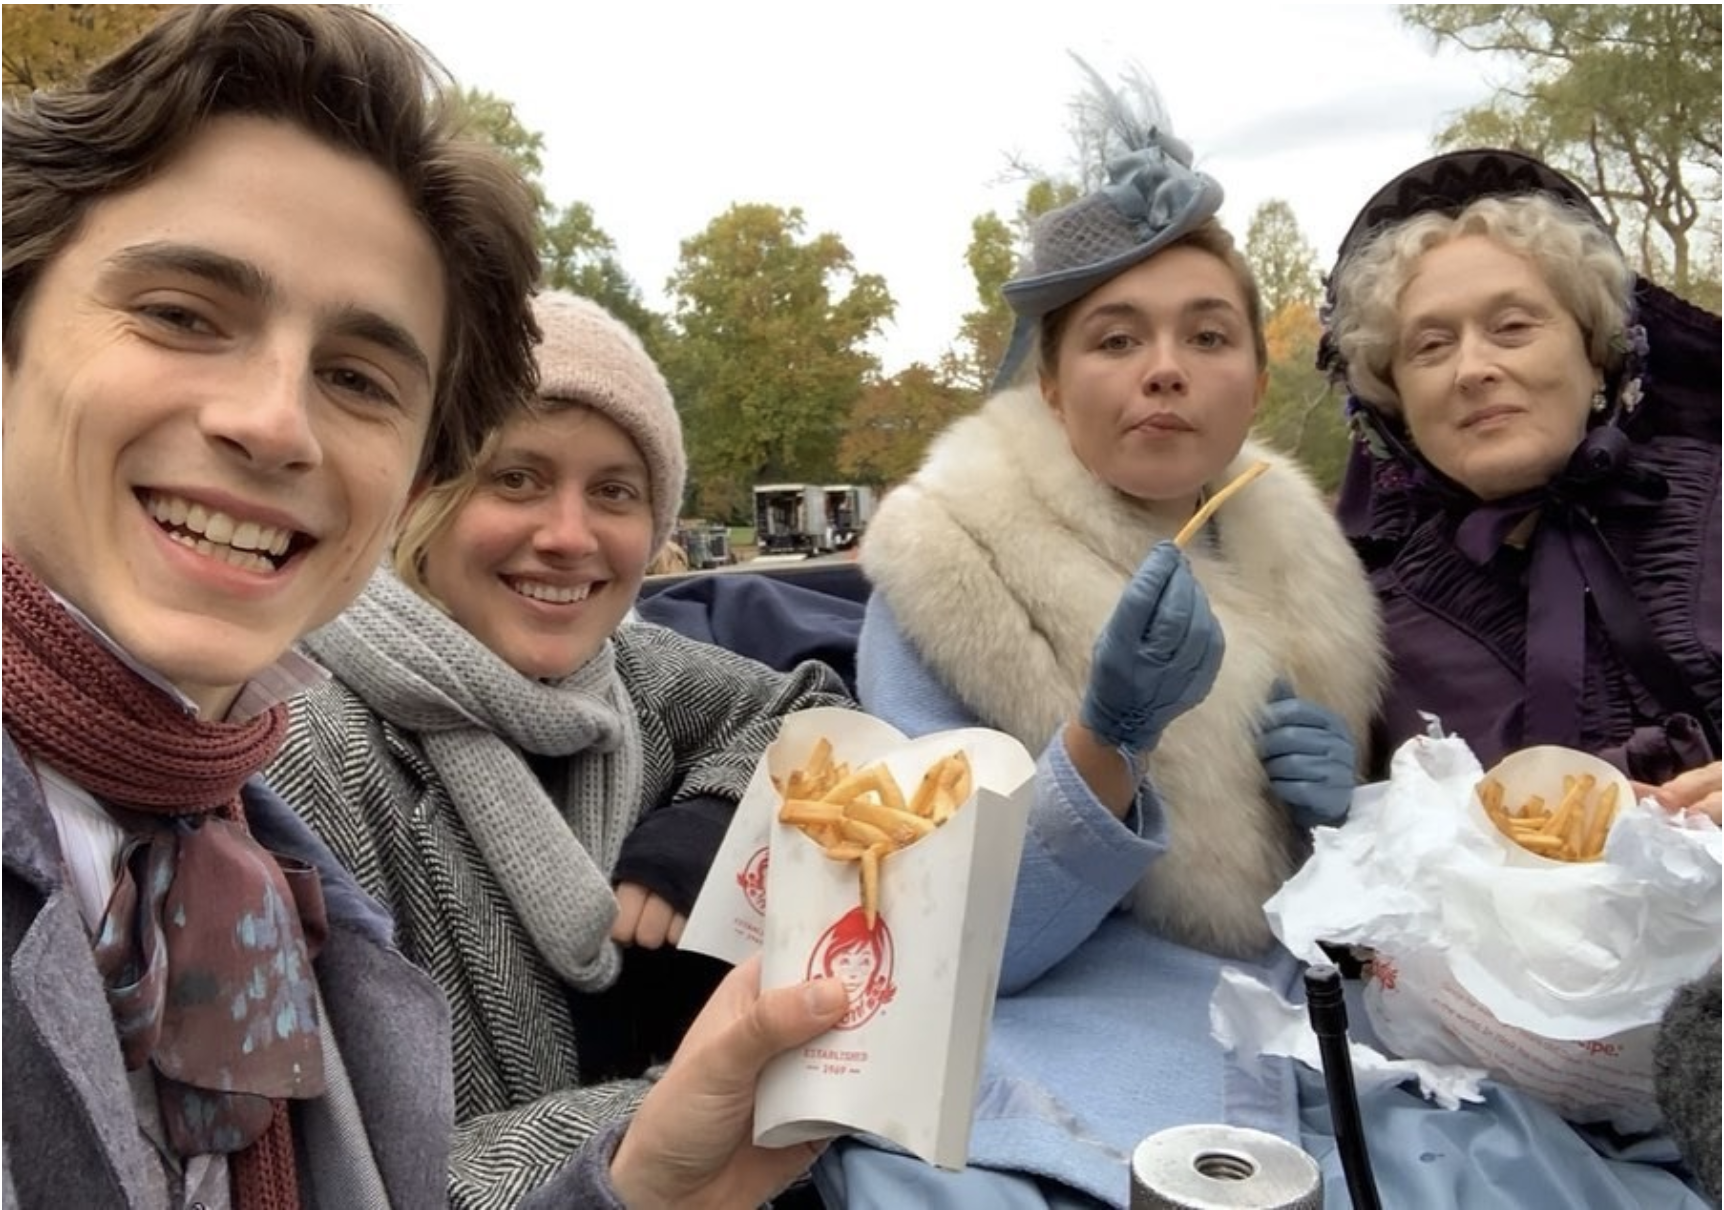 Timothee Chalamet, Greta Gerwig, Florence Pugh, and Meryl Streep eating french fries